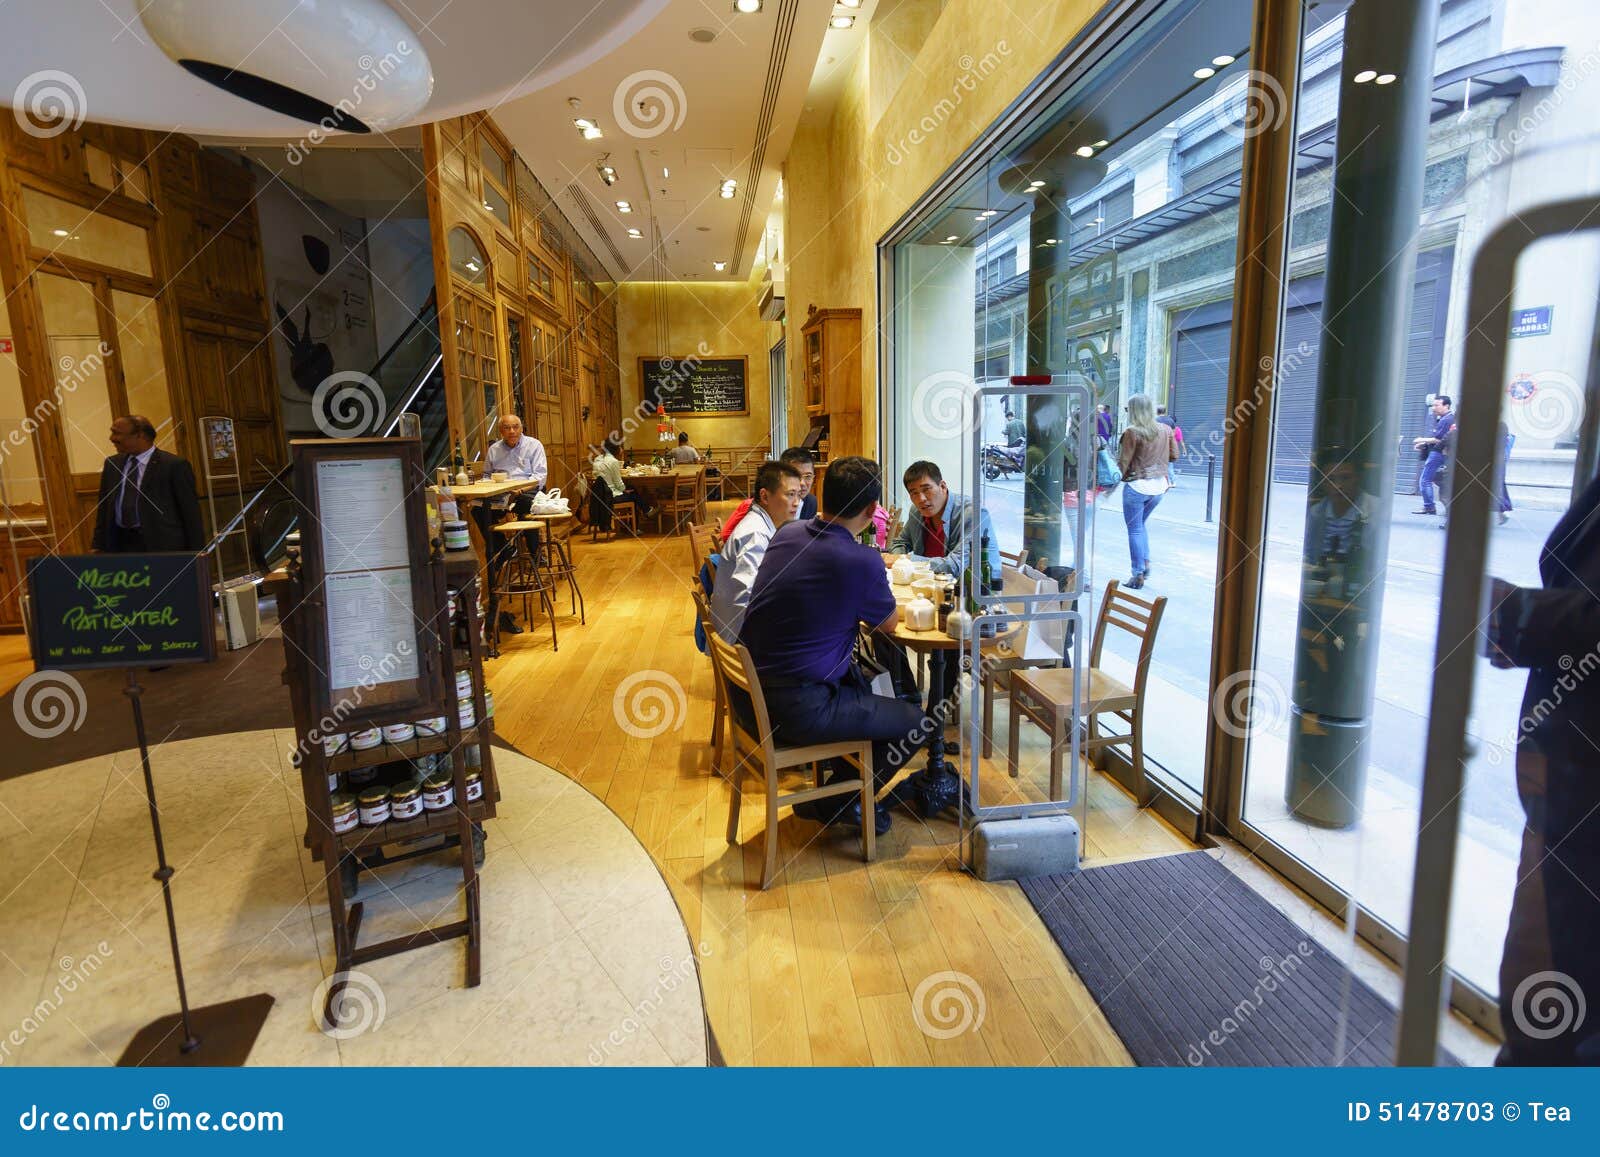 Paris Cafe Interior Editorial Stock Photo Image Of Coffee